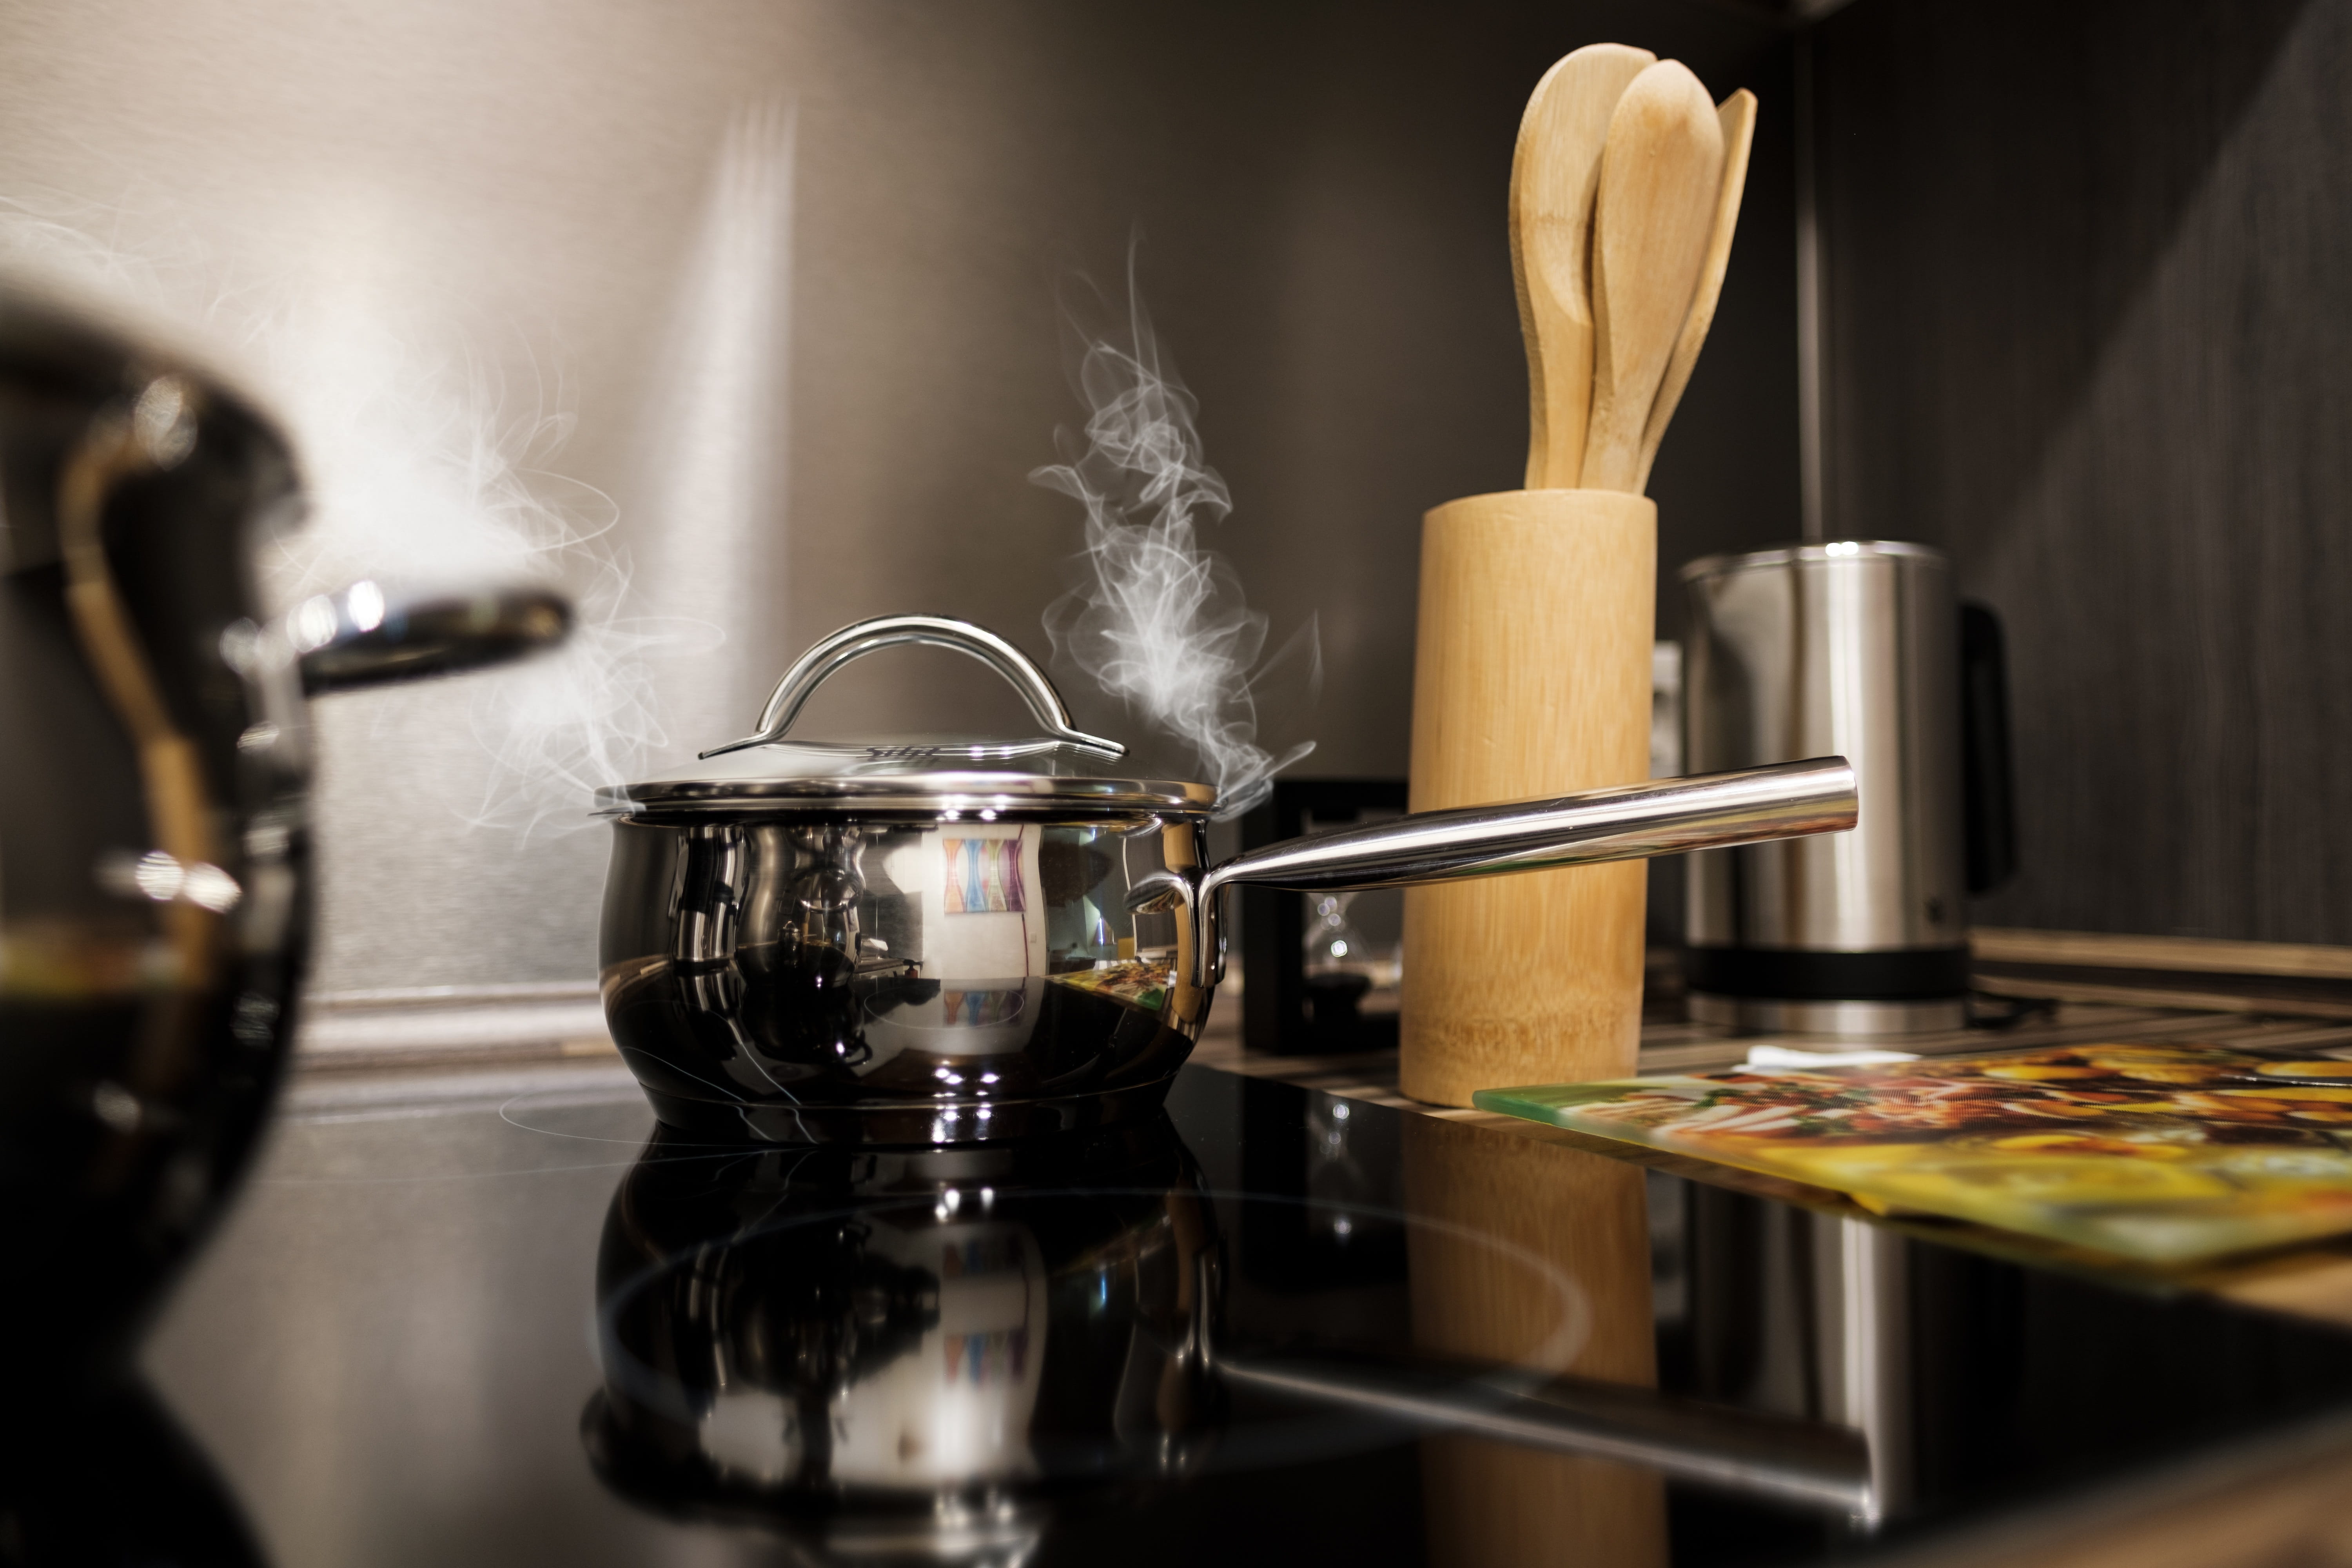 kitchen, cook, pot, cooking pot, stove, steam, hot, kitchen utensil